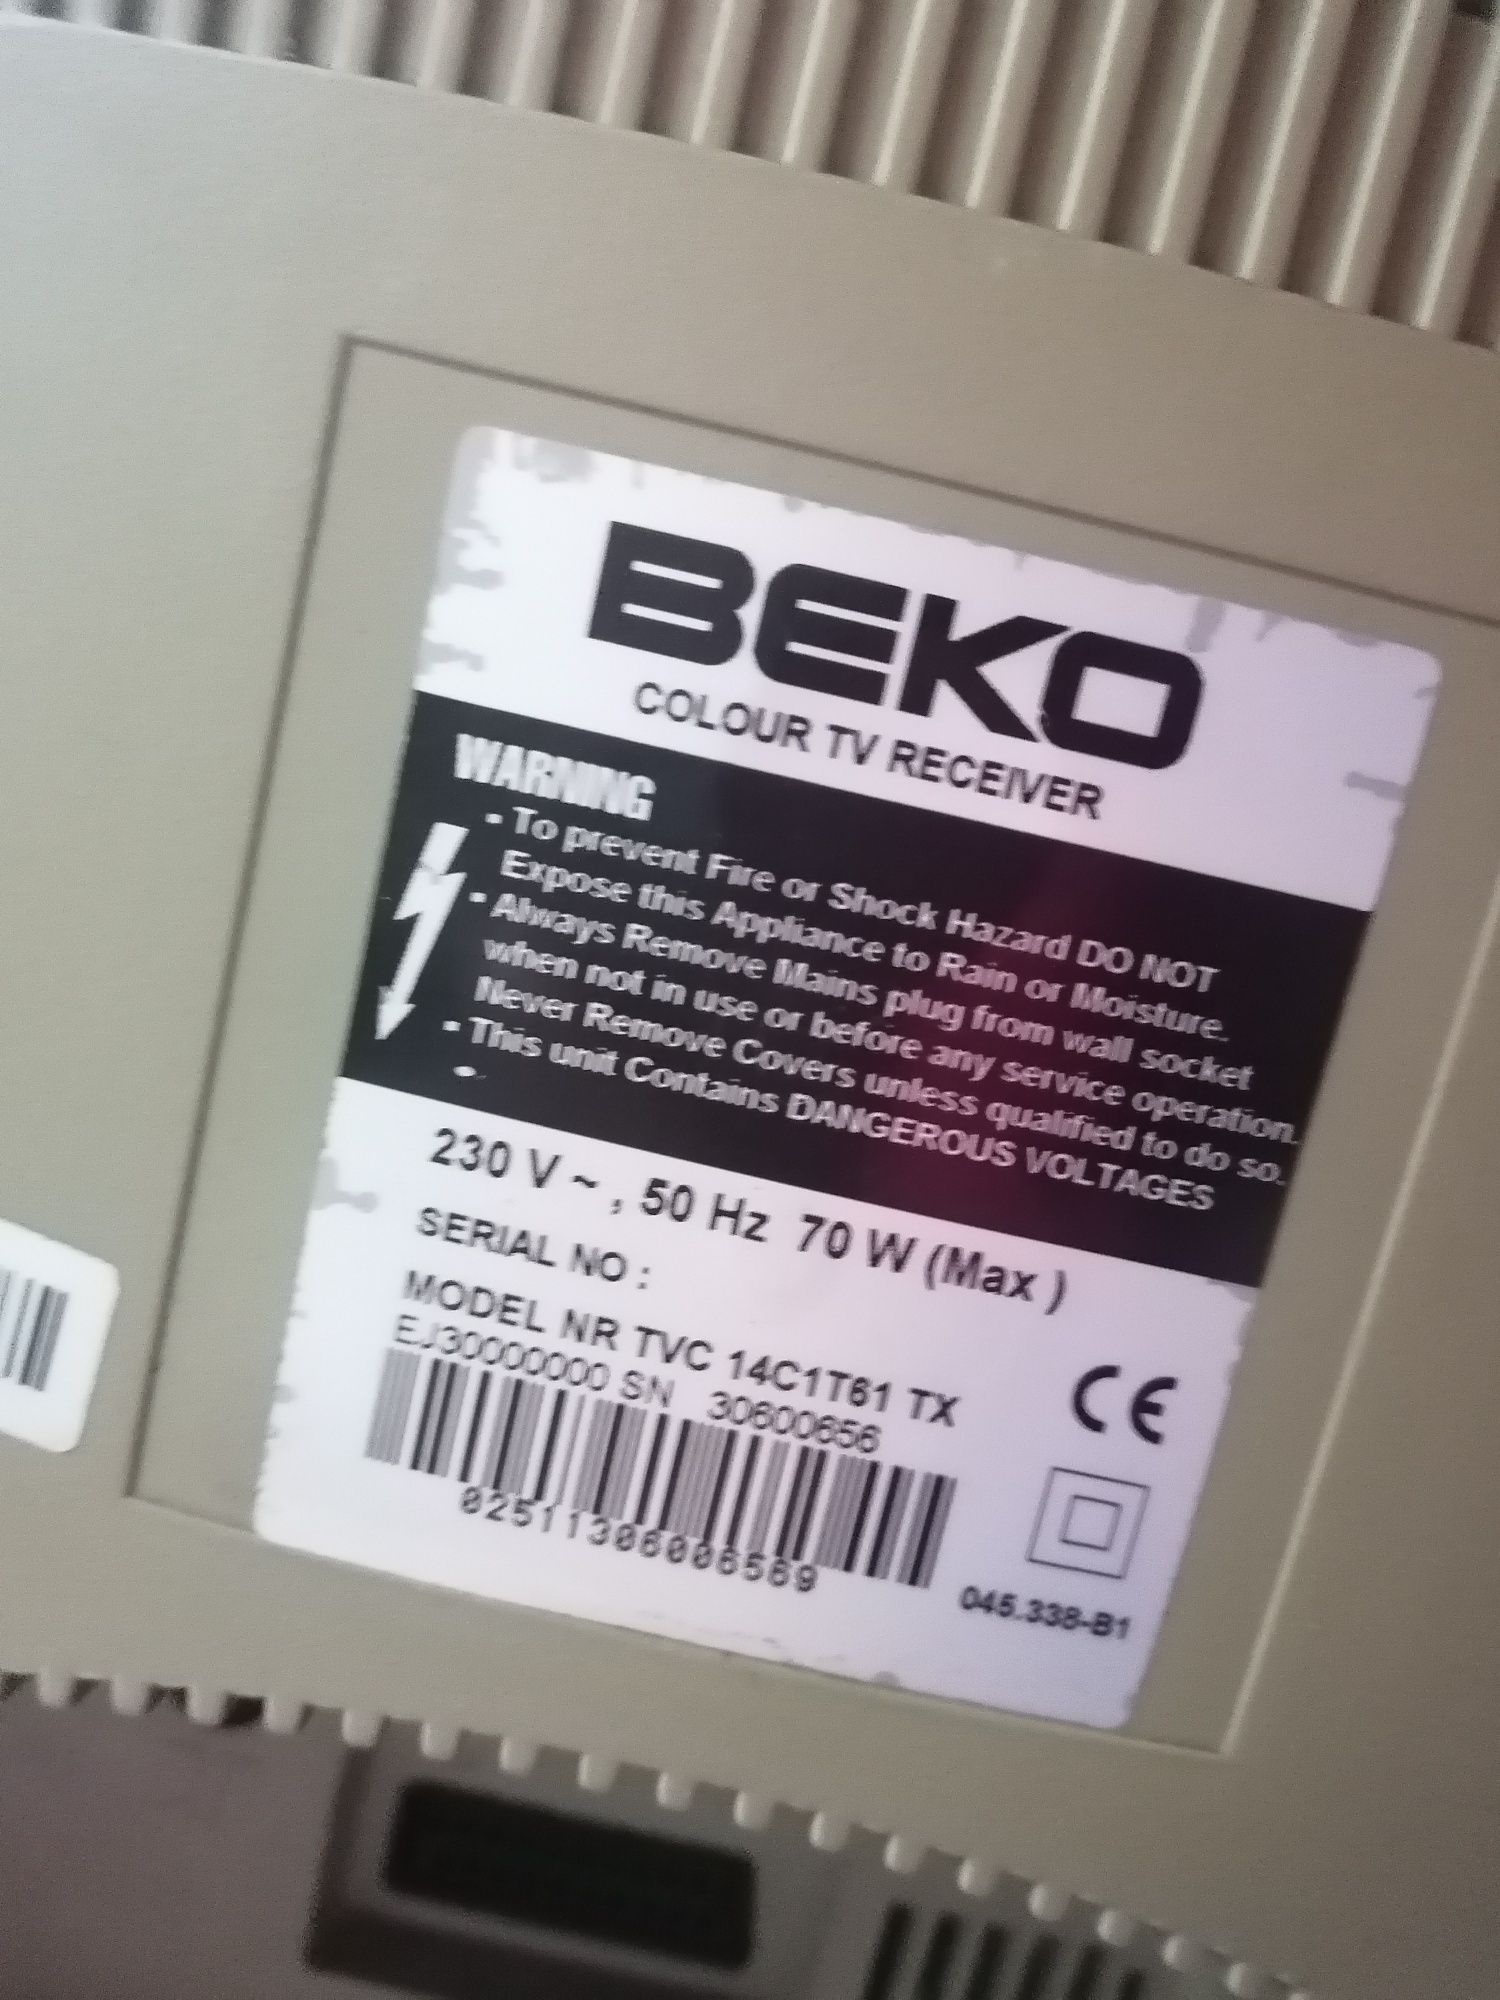 Televisão marca Beko